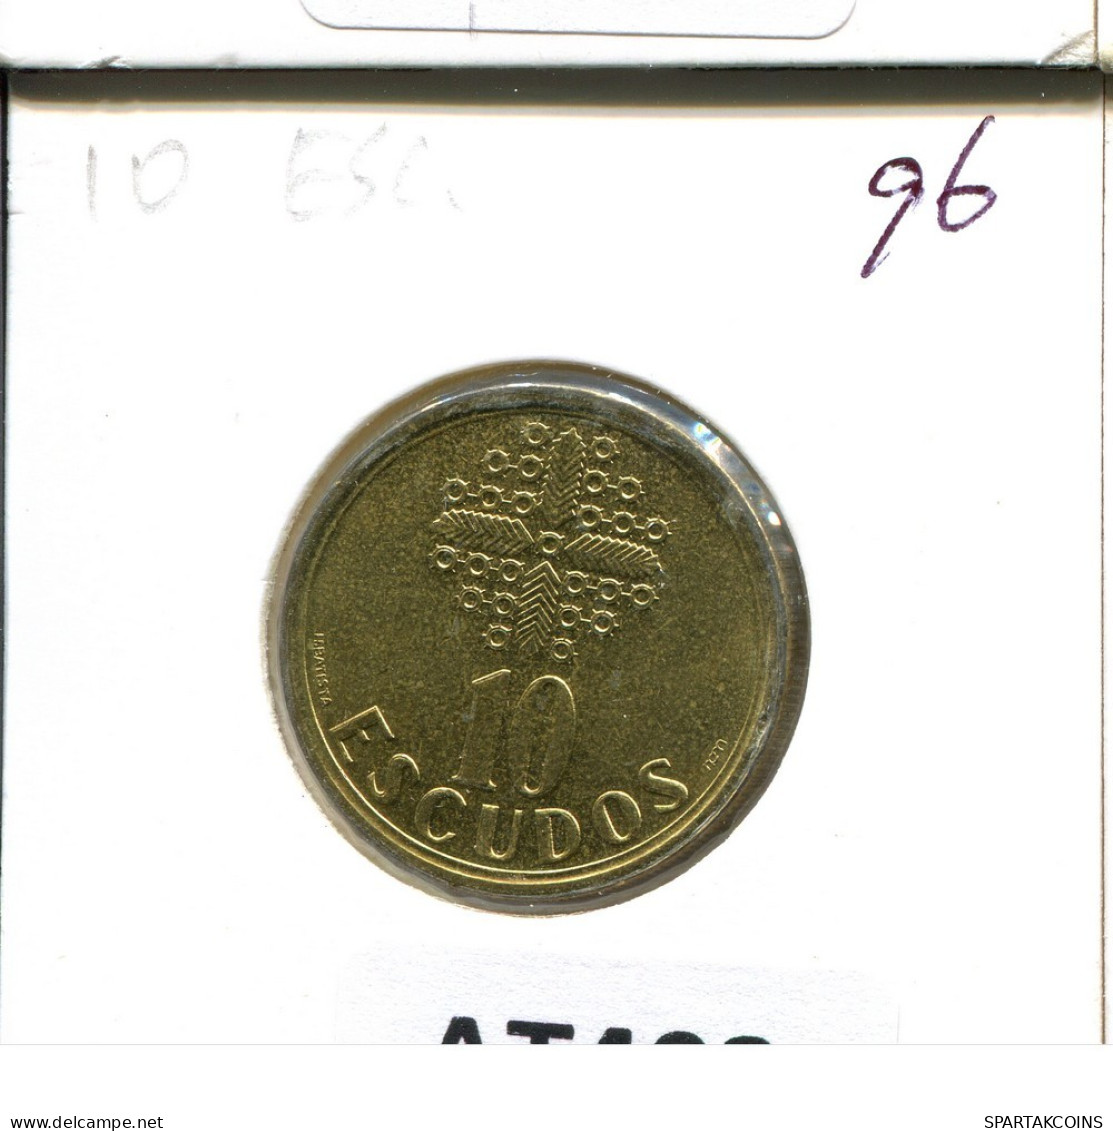 10 ESCUDOS 1996 PORTUGAL Coin #AT403.U.A - Portugal